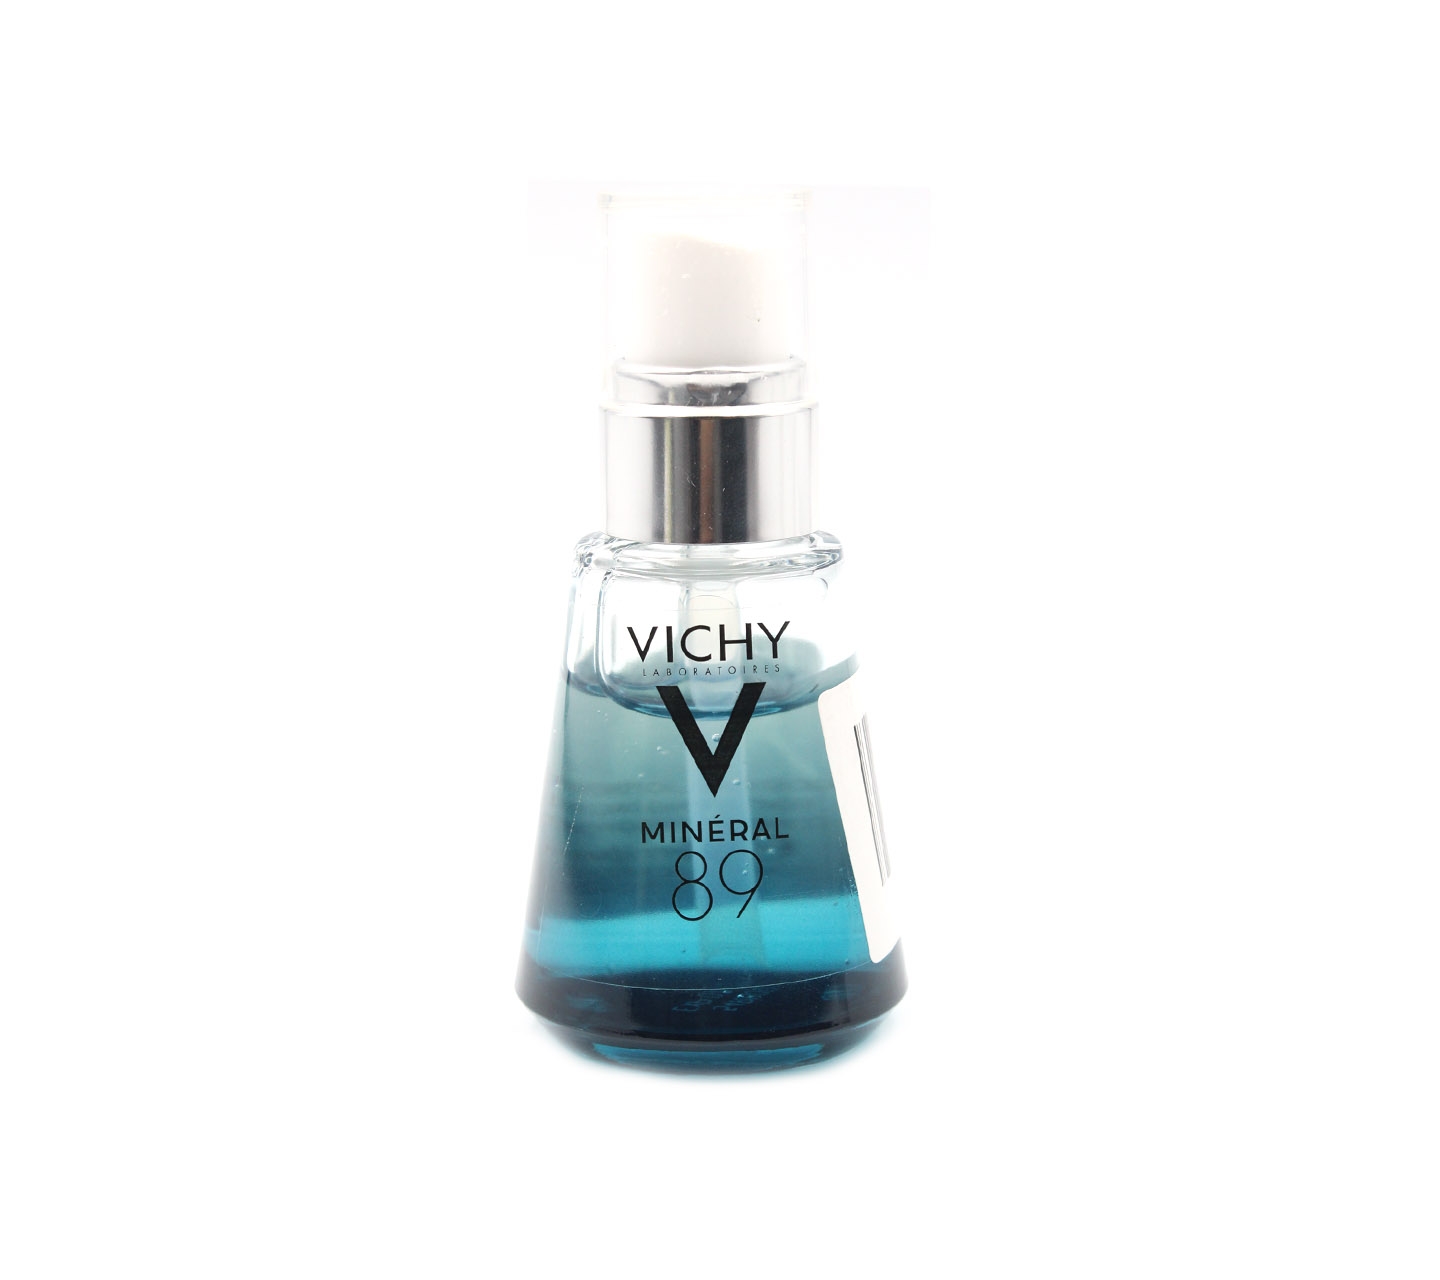 Vichy Mineral 89 Skin Care